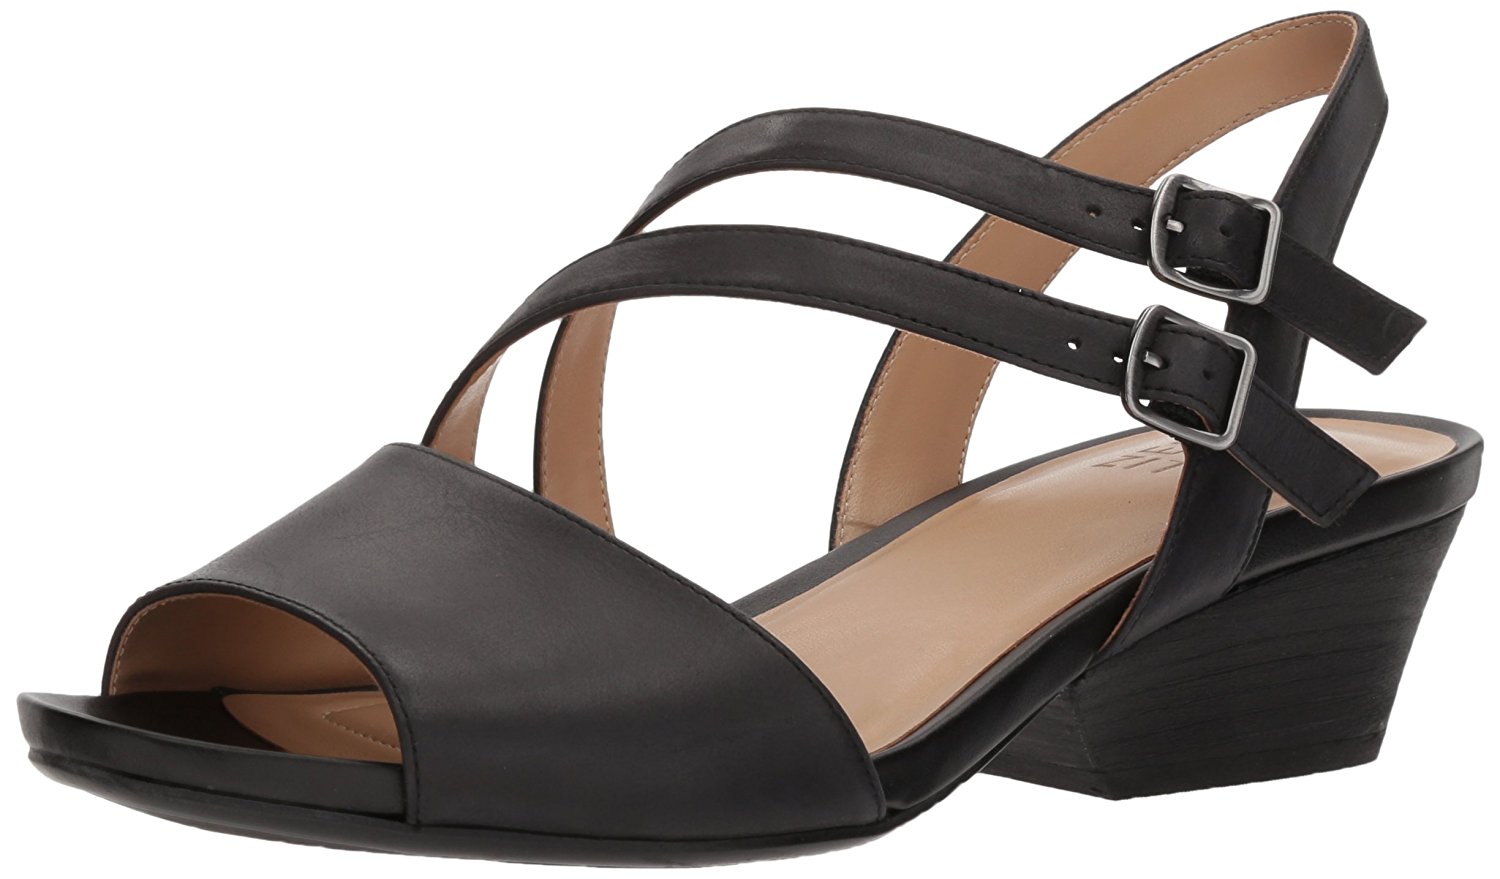 Naturalizer Womens Heeled Sandals in Black Color, Size 7.5 QUF | eBay